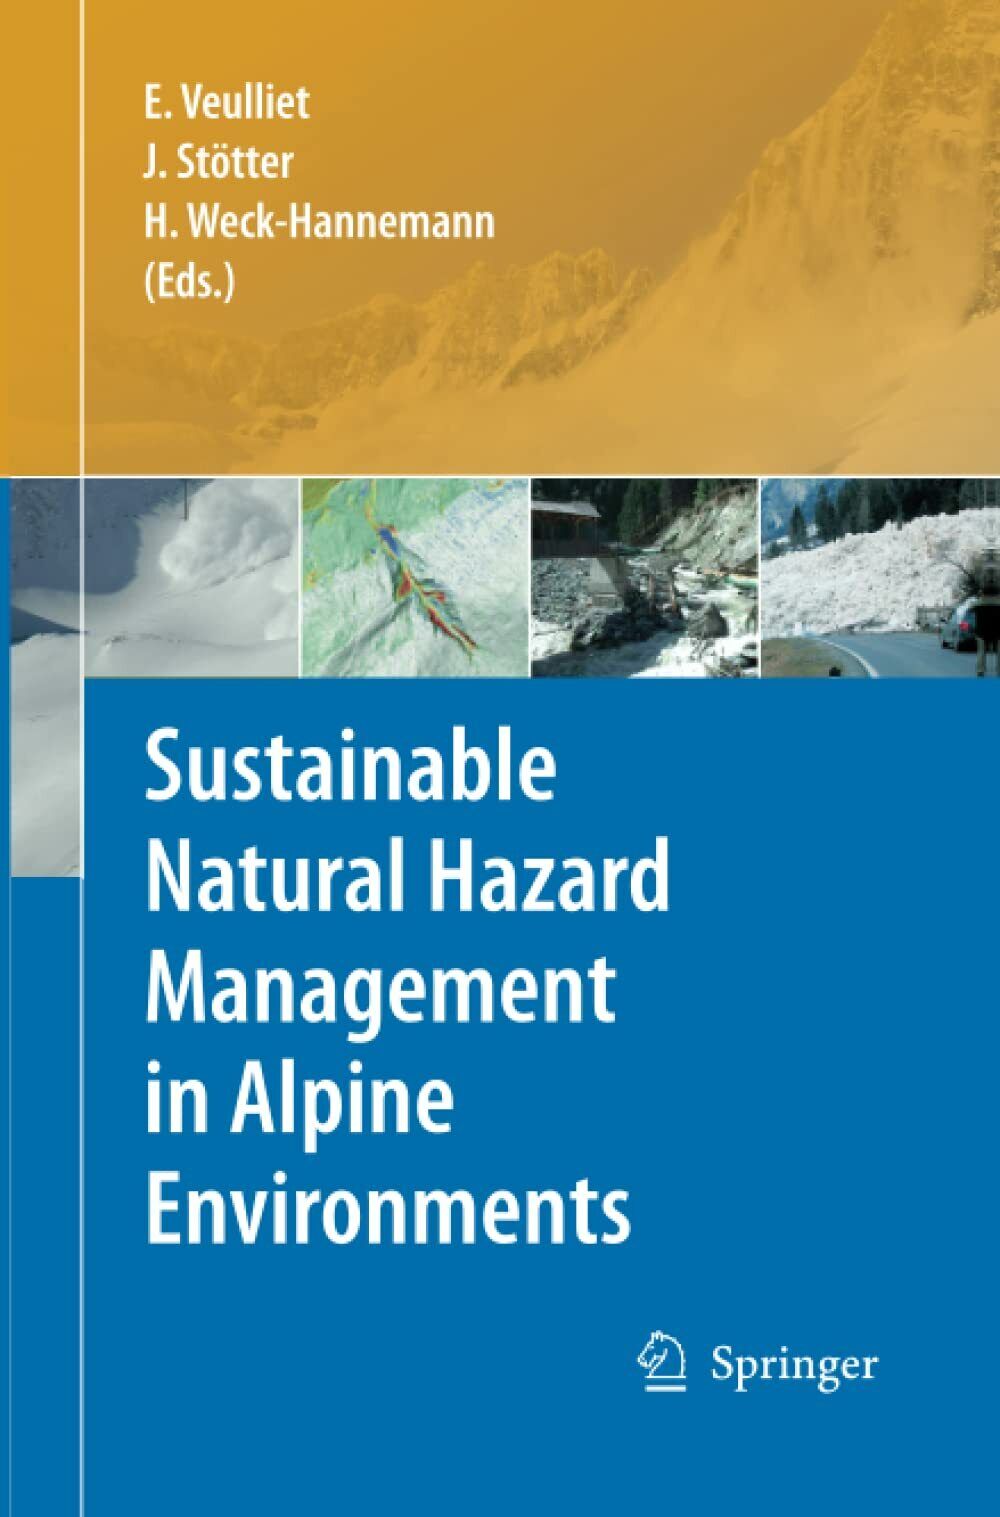 Sustainable Natural Hazard Management in Alpine Environments - Springer, 2014